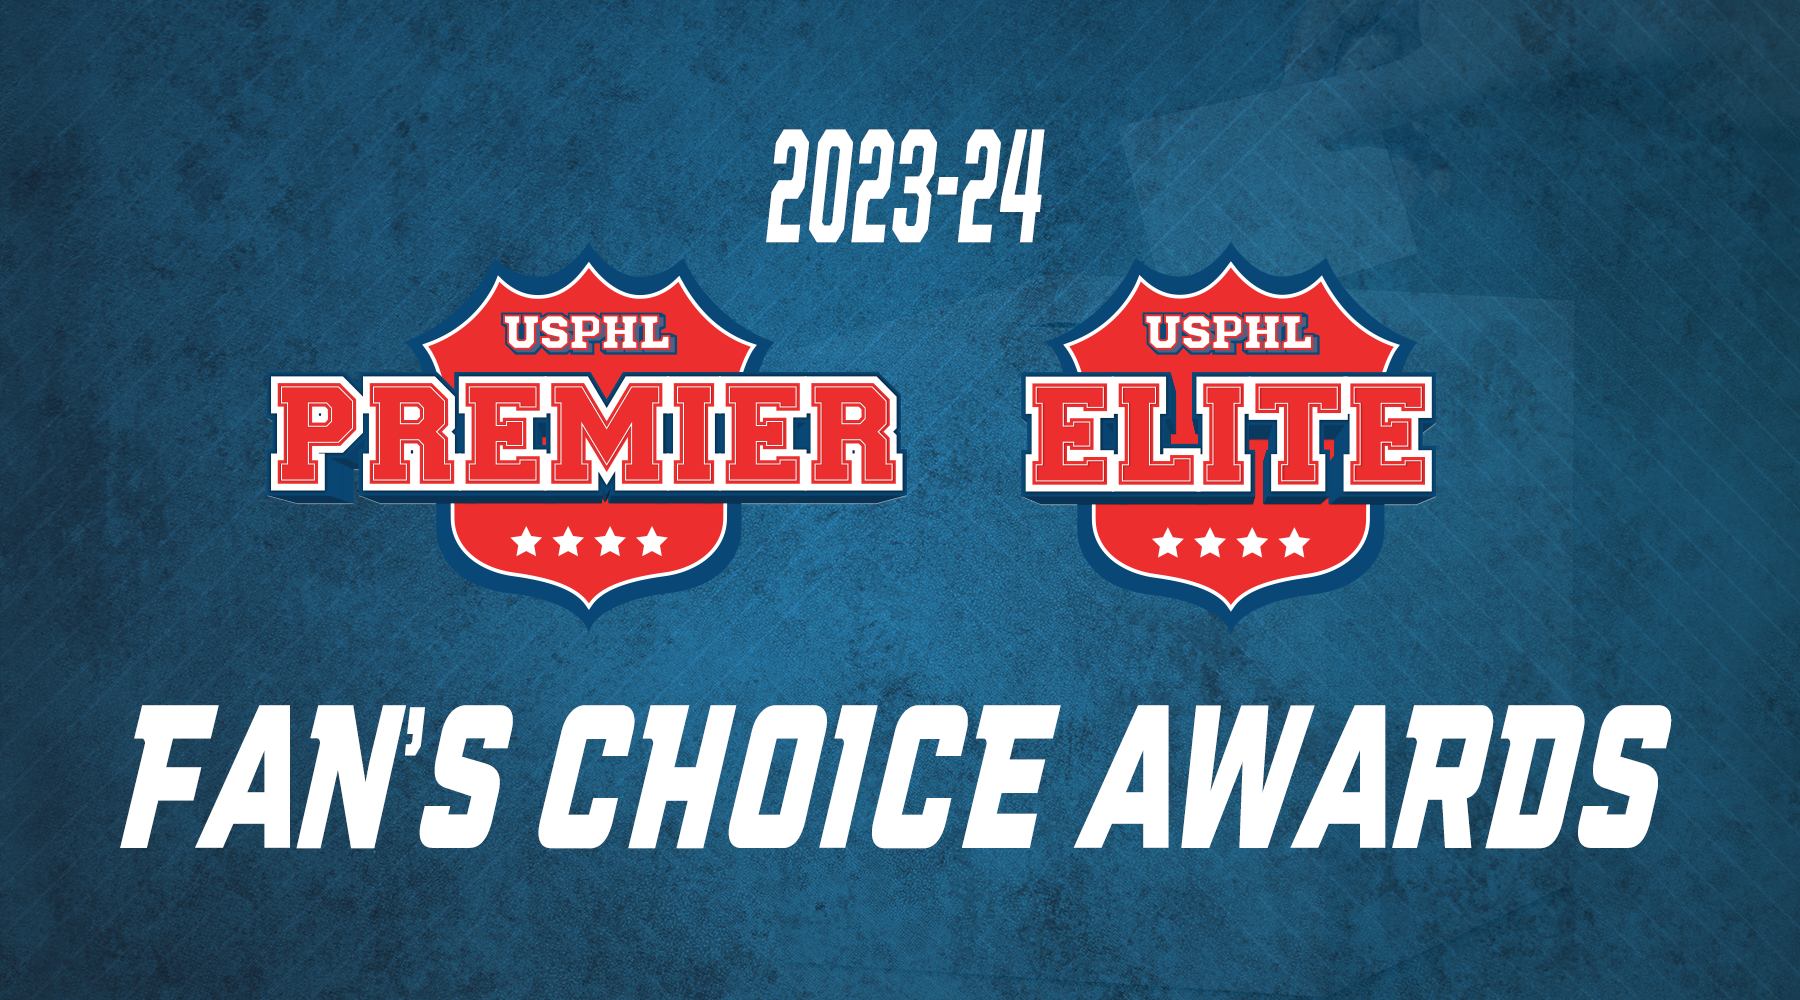 USPHL Premier And USPHL Elite Fan’s Choice Awards Voting Now Open